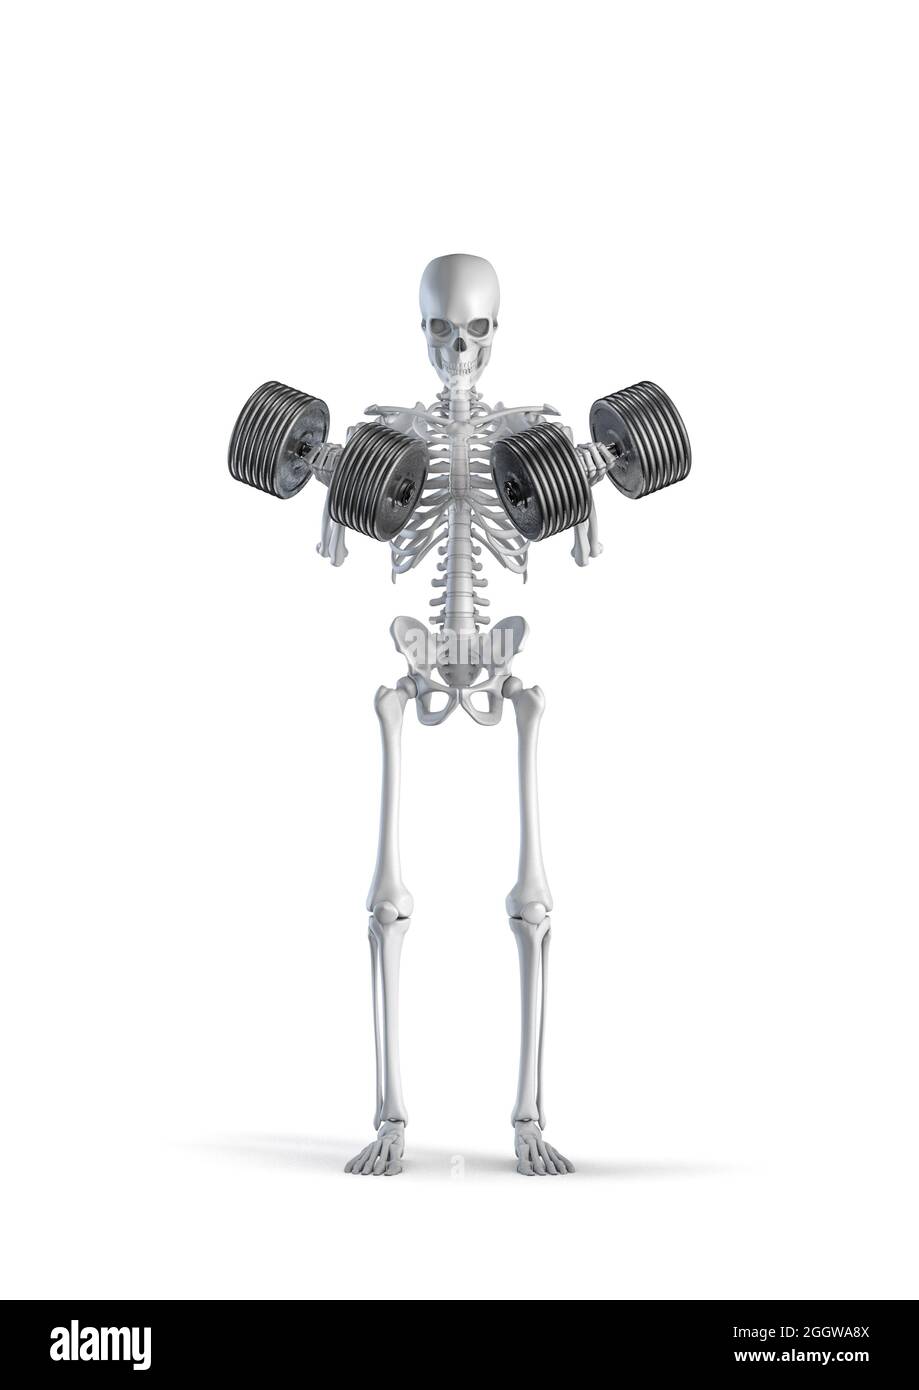 Fitness skeleton with dumbbells - 3D illustration of male human skeleton figure lifting heavy dumbbell pair isolated on white studio background Stock Photo